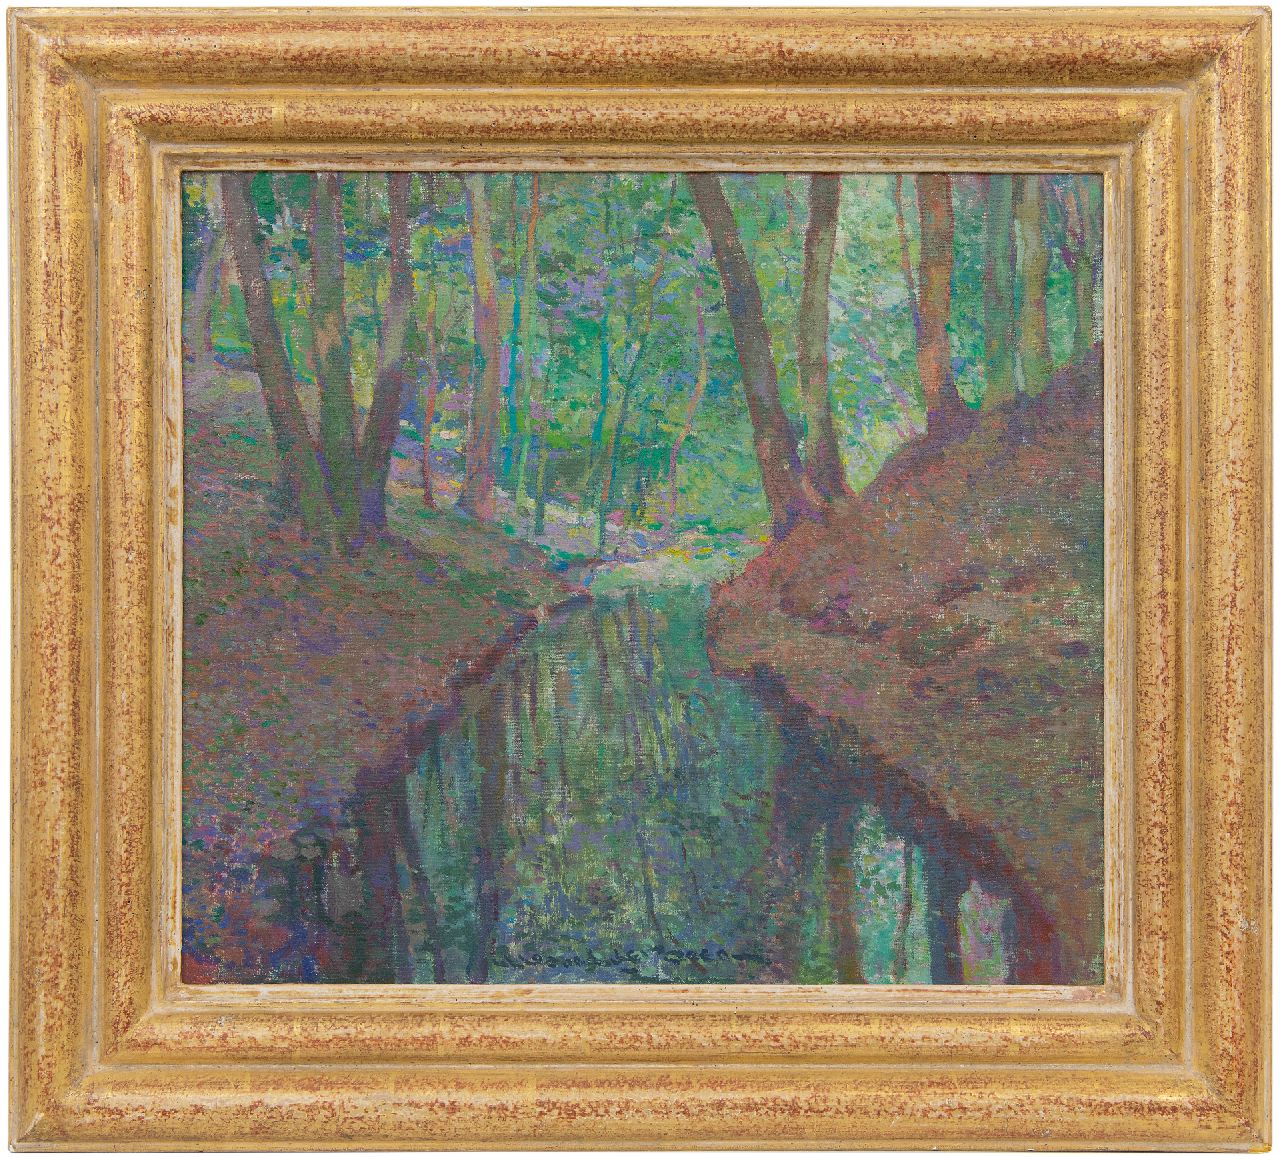 Boer H. de | Hessel de Boer | Paintings offered for sale | A forest creek, oil on canvas 45.1 x 50.0 cm, signed l.m.